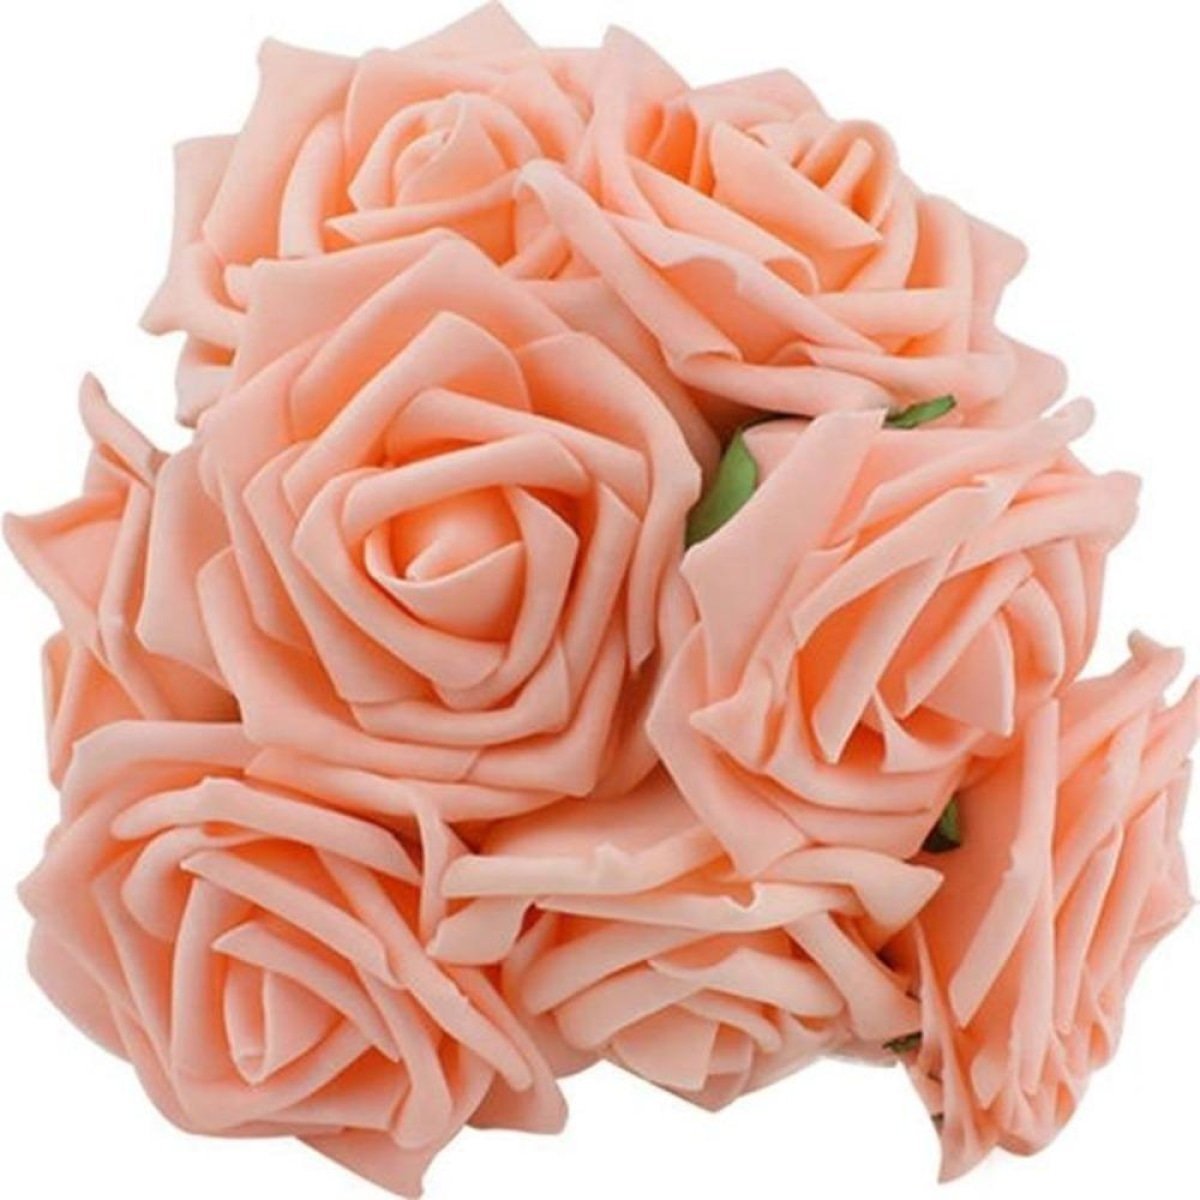 20pcs 7cm Artificial Flowers with Stems Foam Rose Fake Bride Bouquet Wedding - Peach/Orange - - Asia Sell